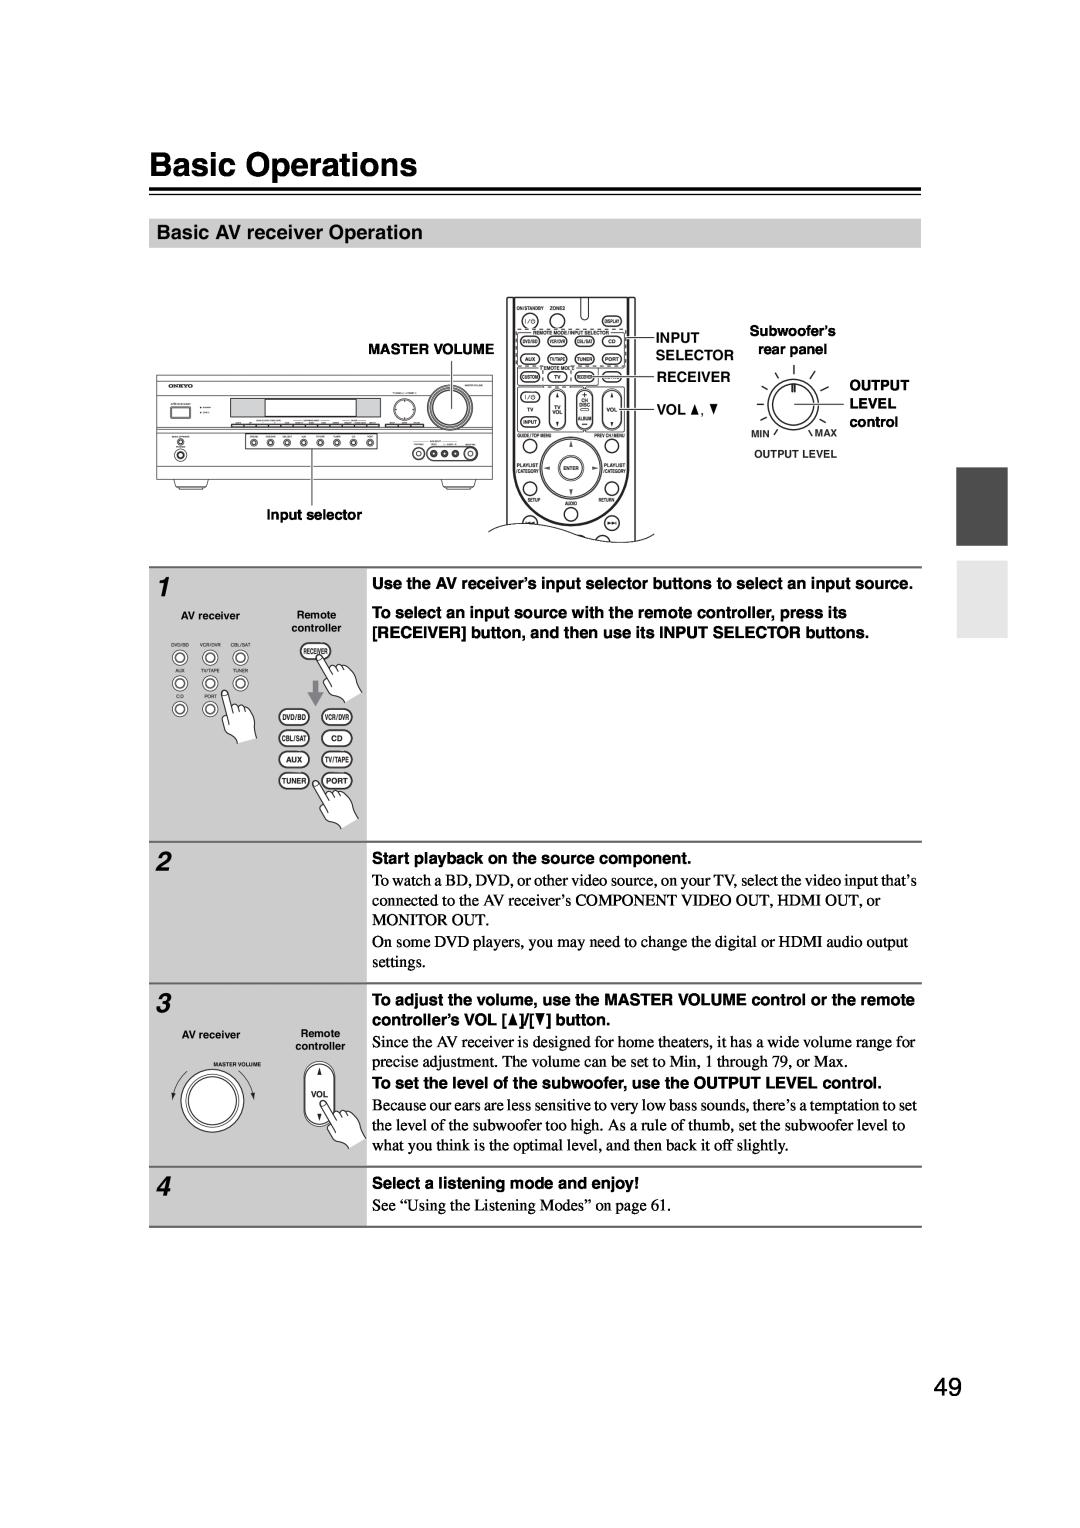 Onkyo HT-S6200, 29344937 instruction manual Basic Operations, Basic AV receiver Operation 